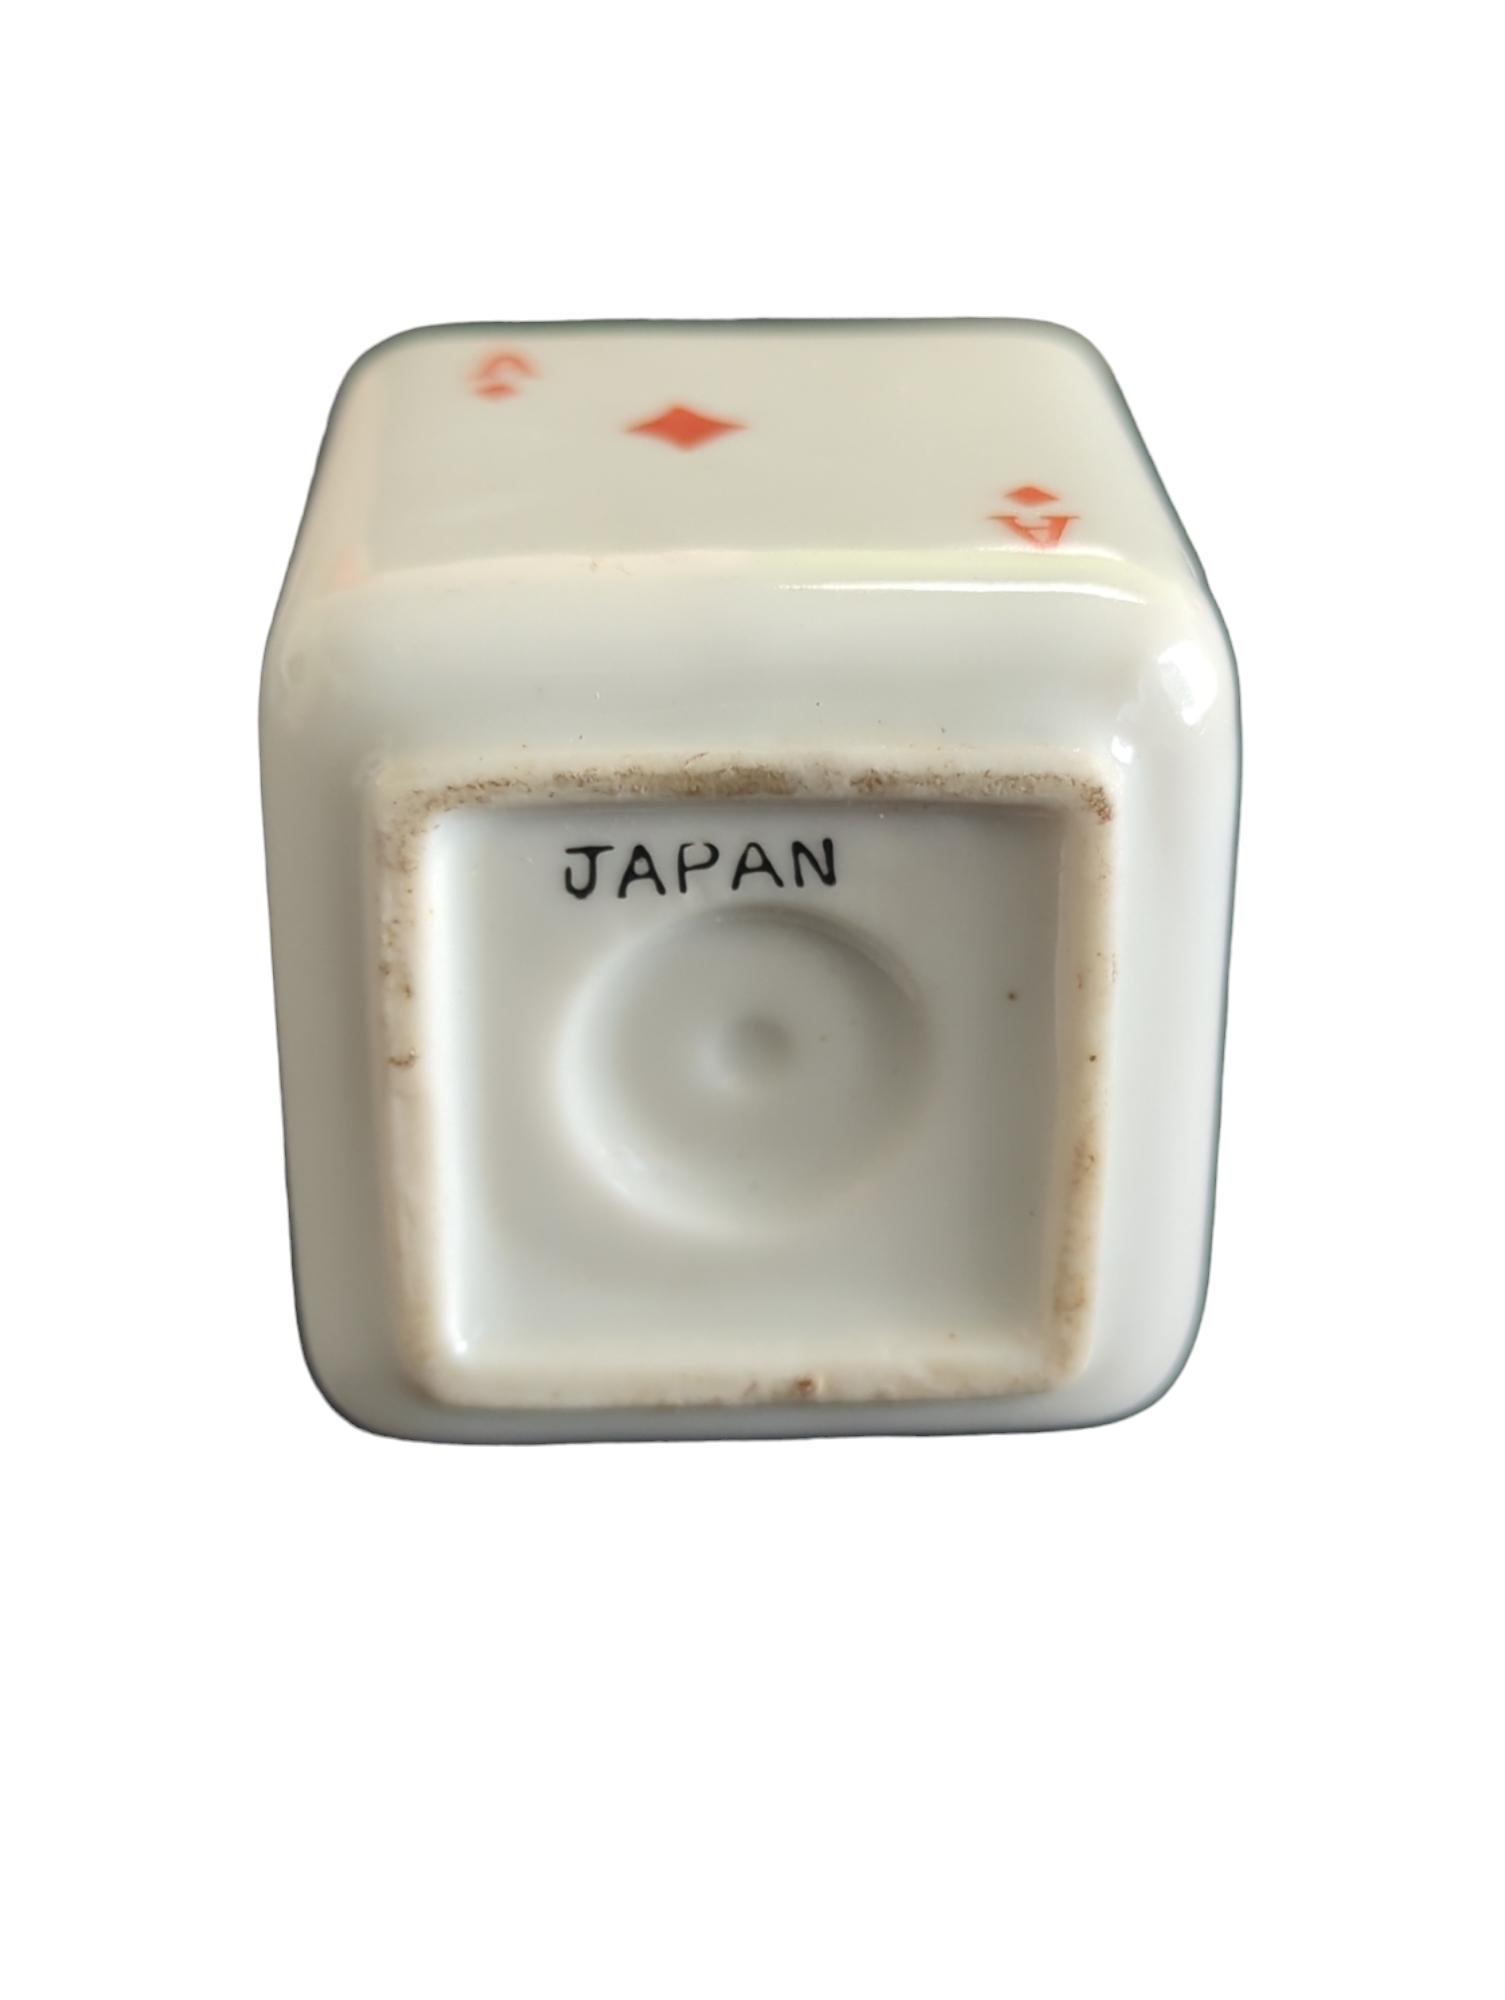 Vintage Japan card suits table lighter